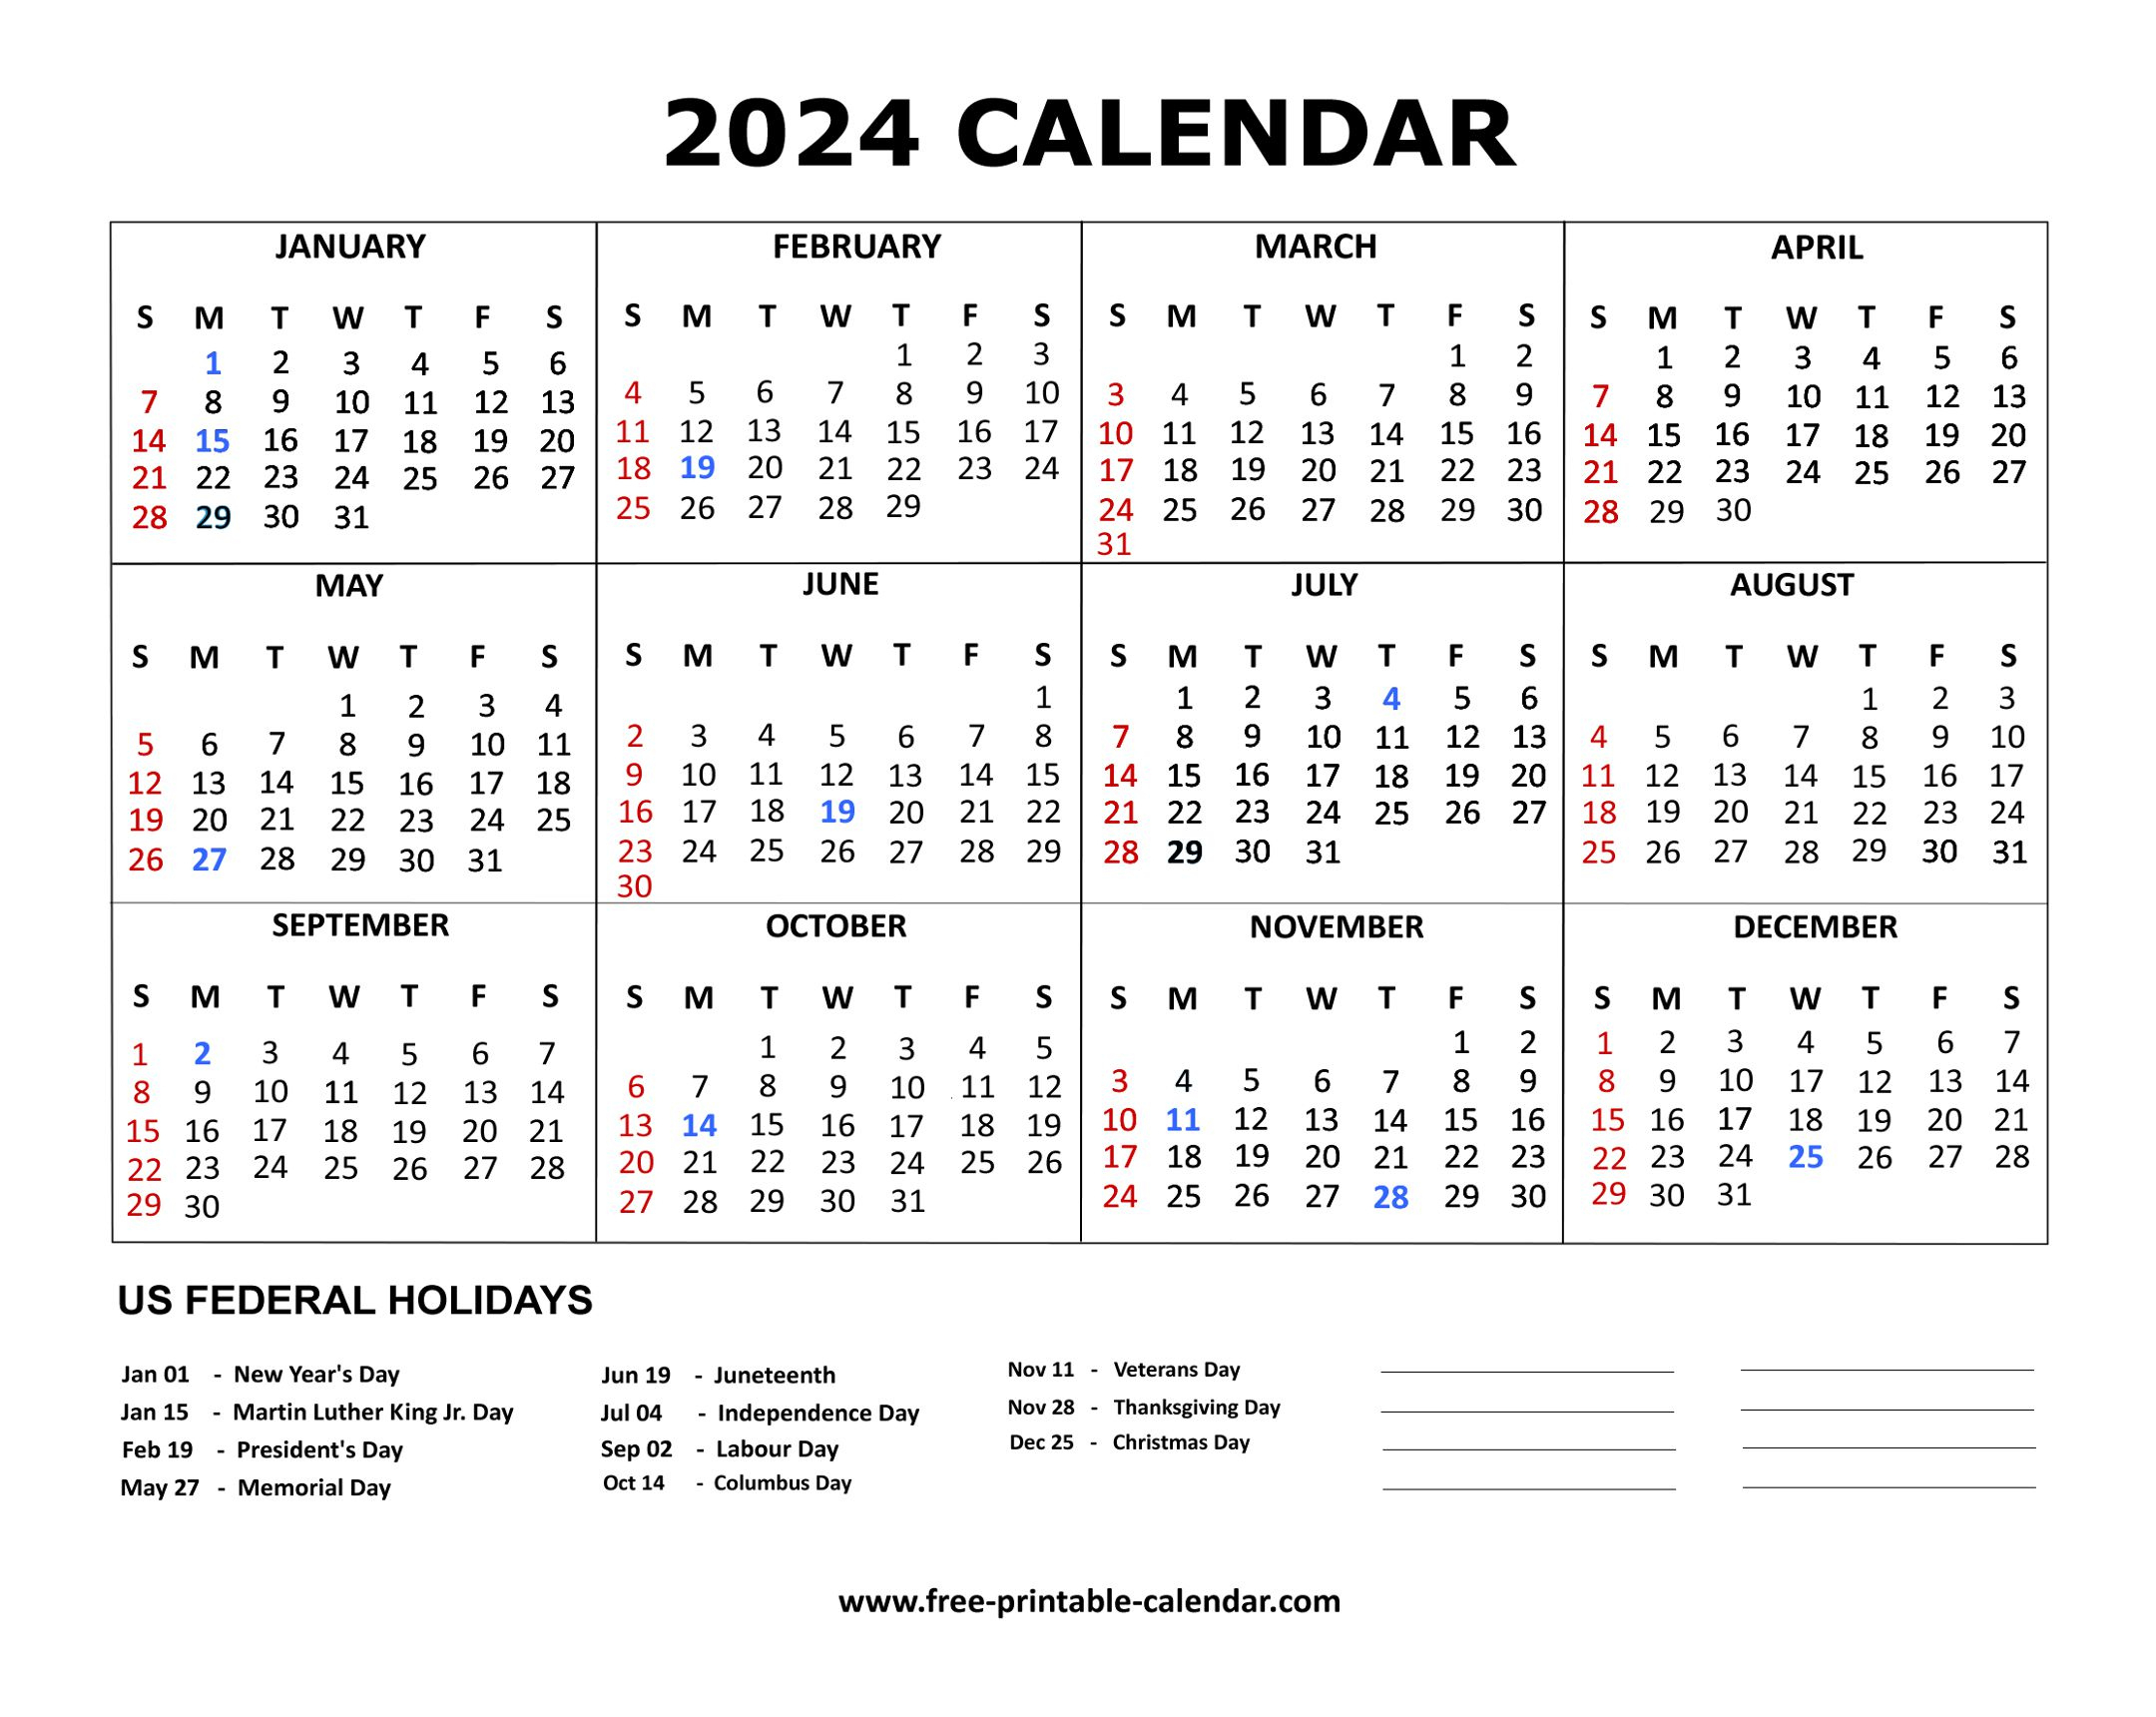 2024 Calendar | 2024 Yearly Calendar Printable With Holidays